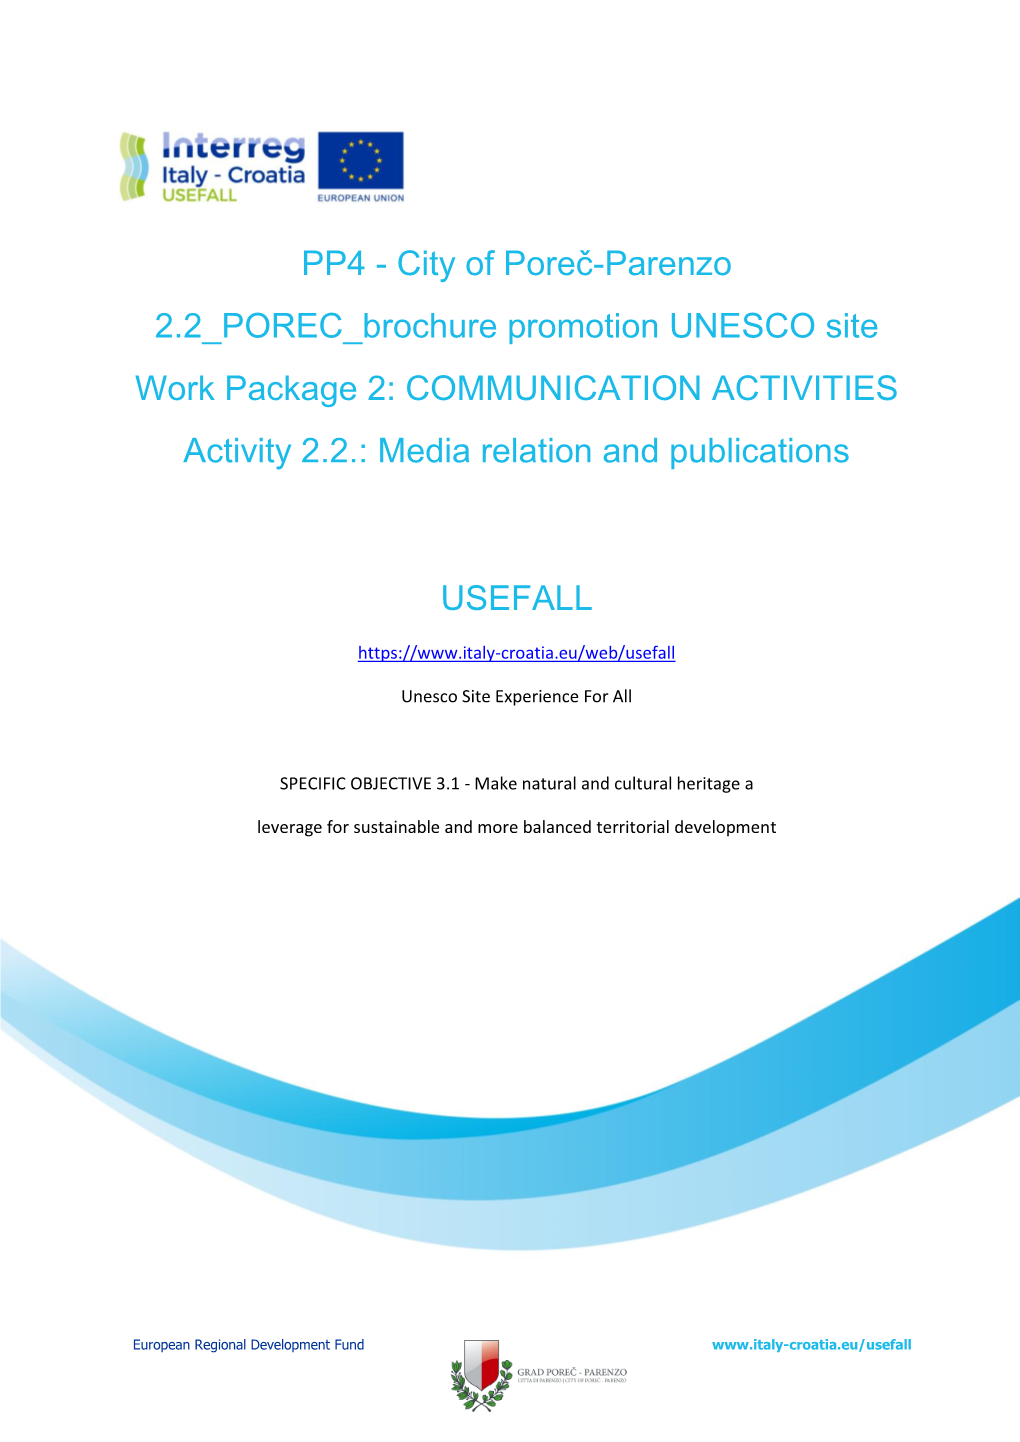 PP4 - City of Poreč-Parenzo 2.2 POREC Brochure Promotion UNESCO Site Work Package 2: COMMUNICATION ACTIVITIES Activity 2.2.: Media Relation and Publications